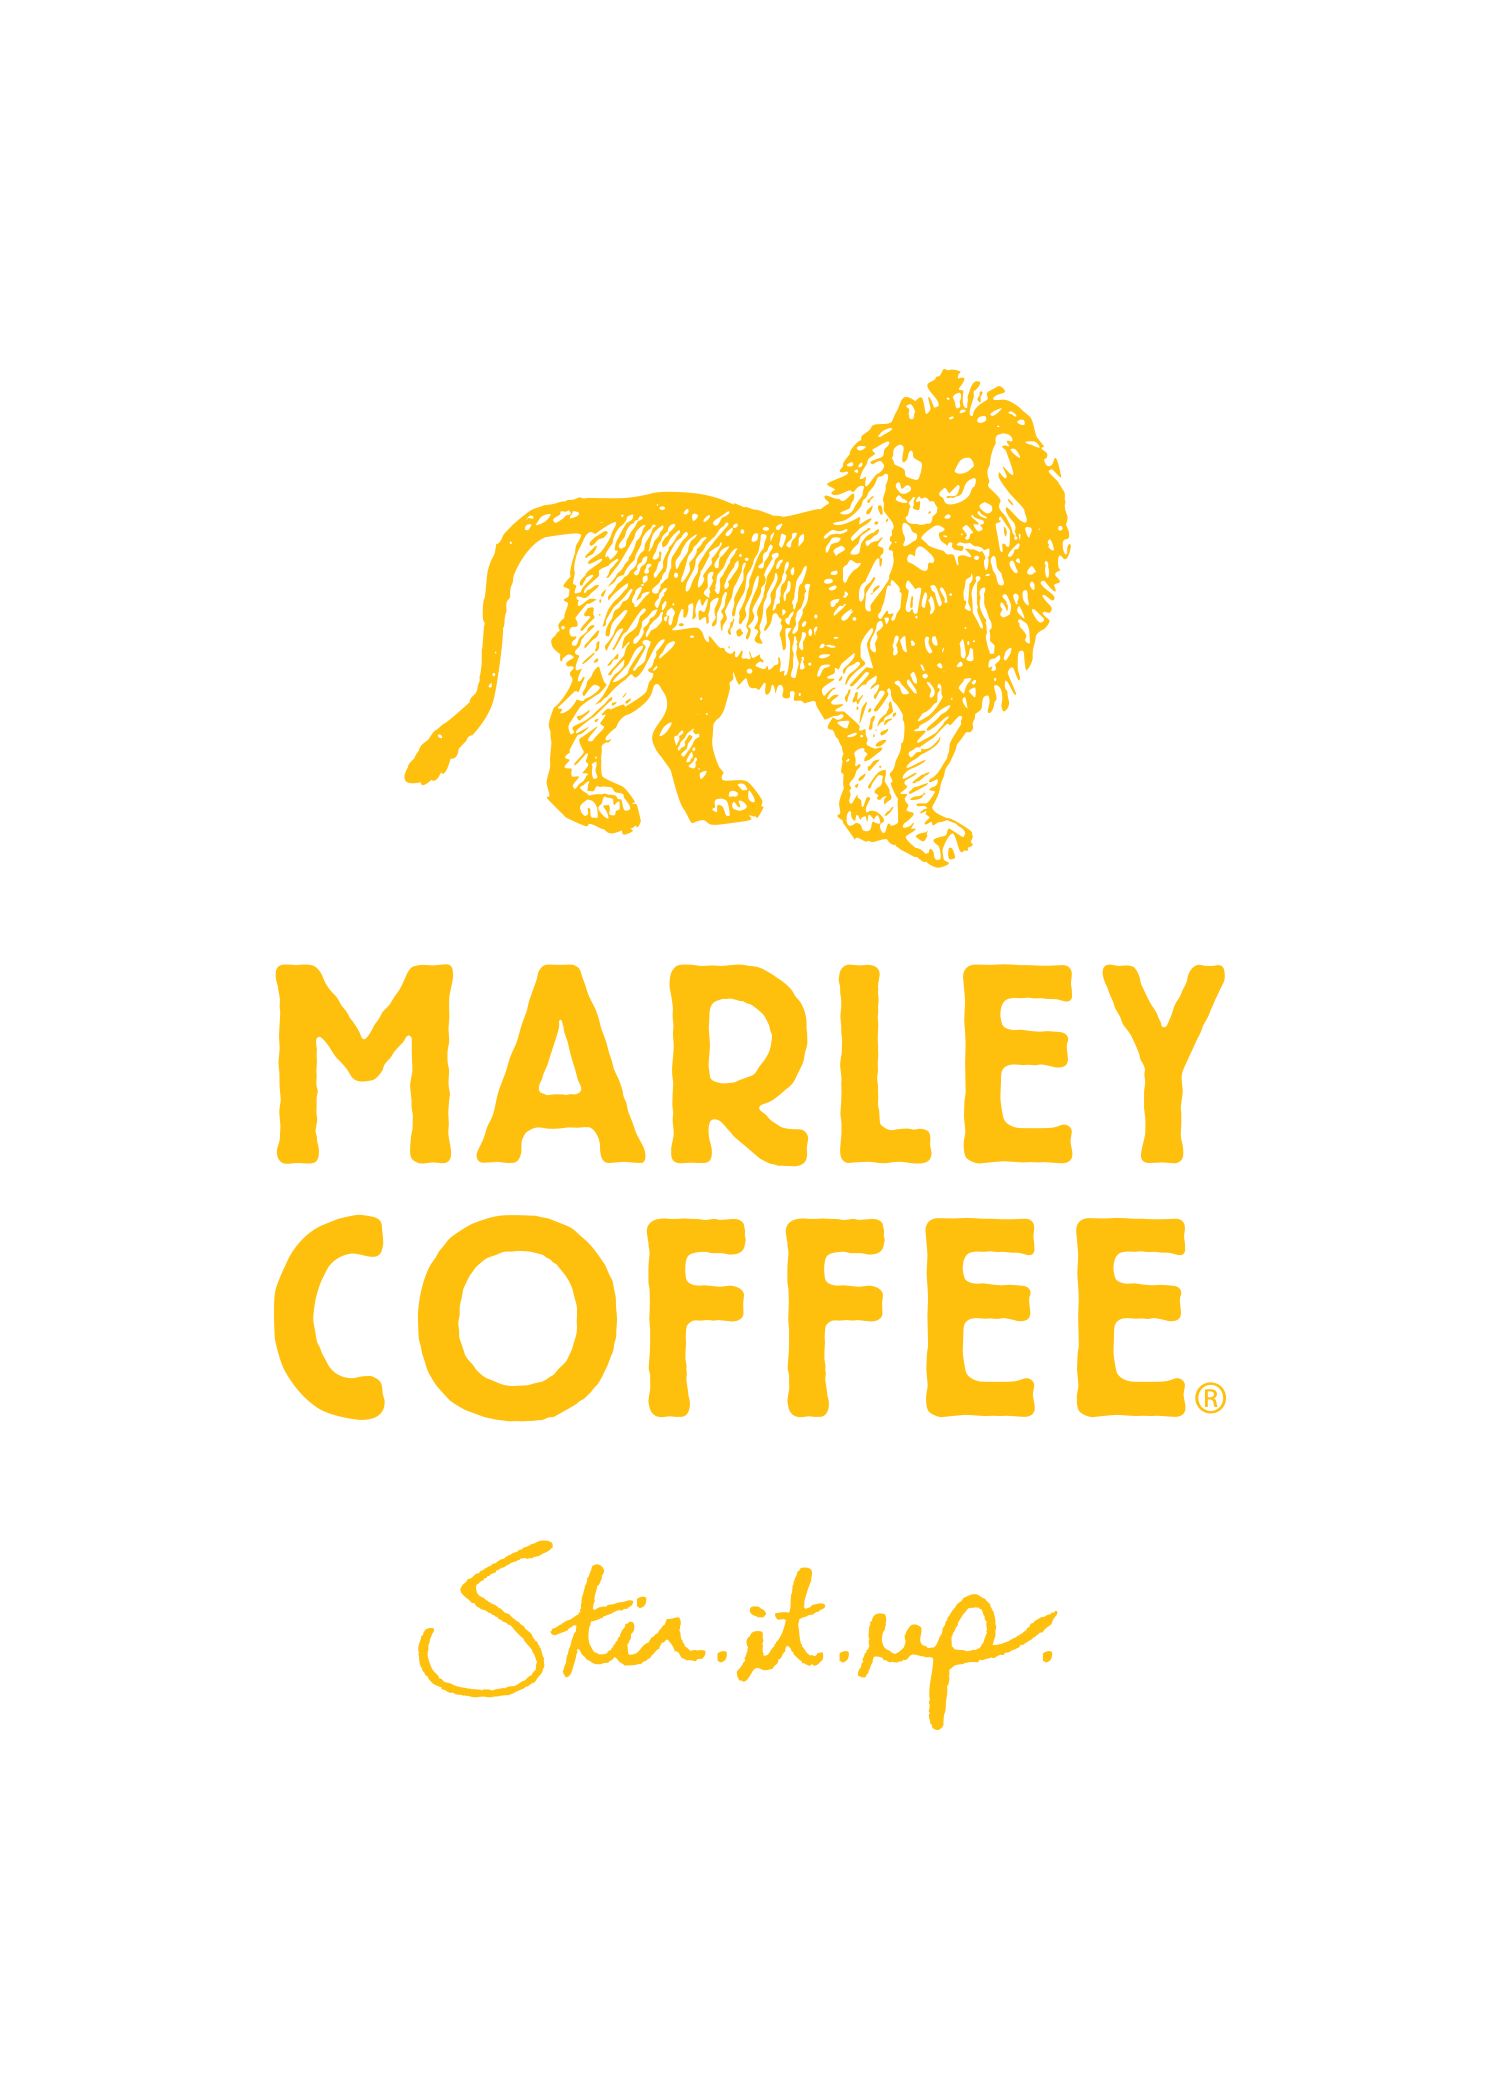 Marley Coffee Expand